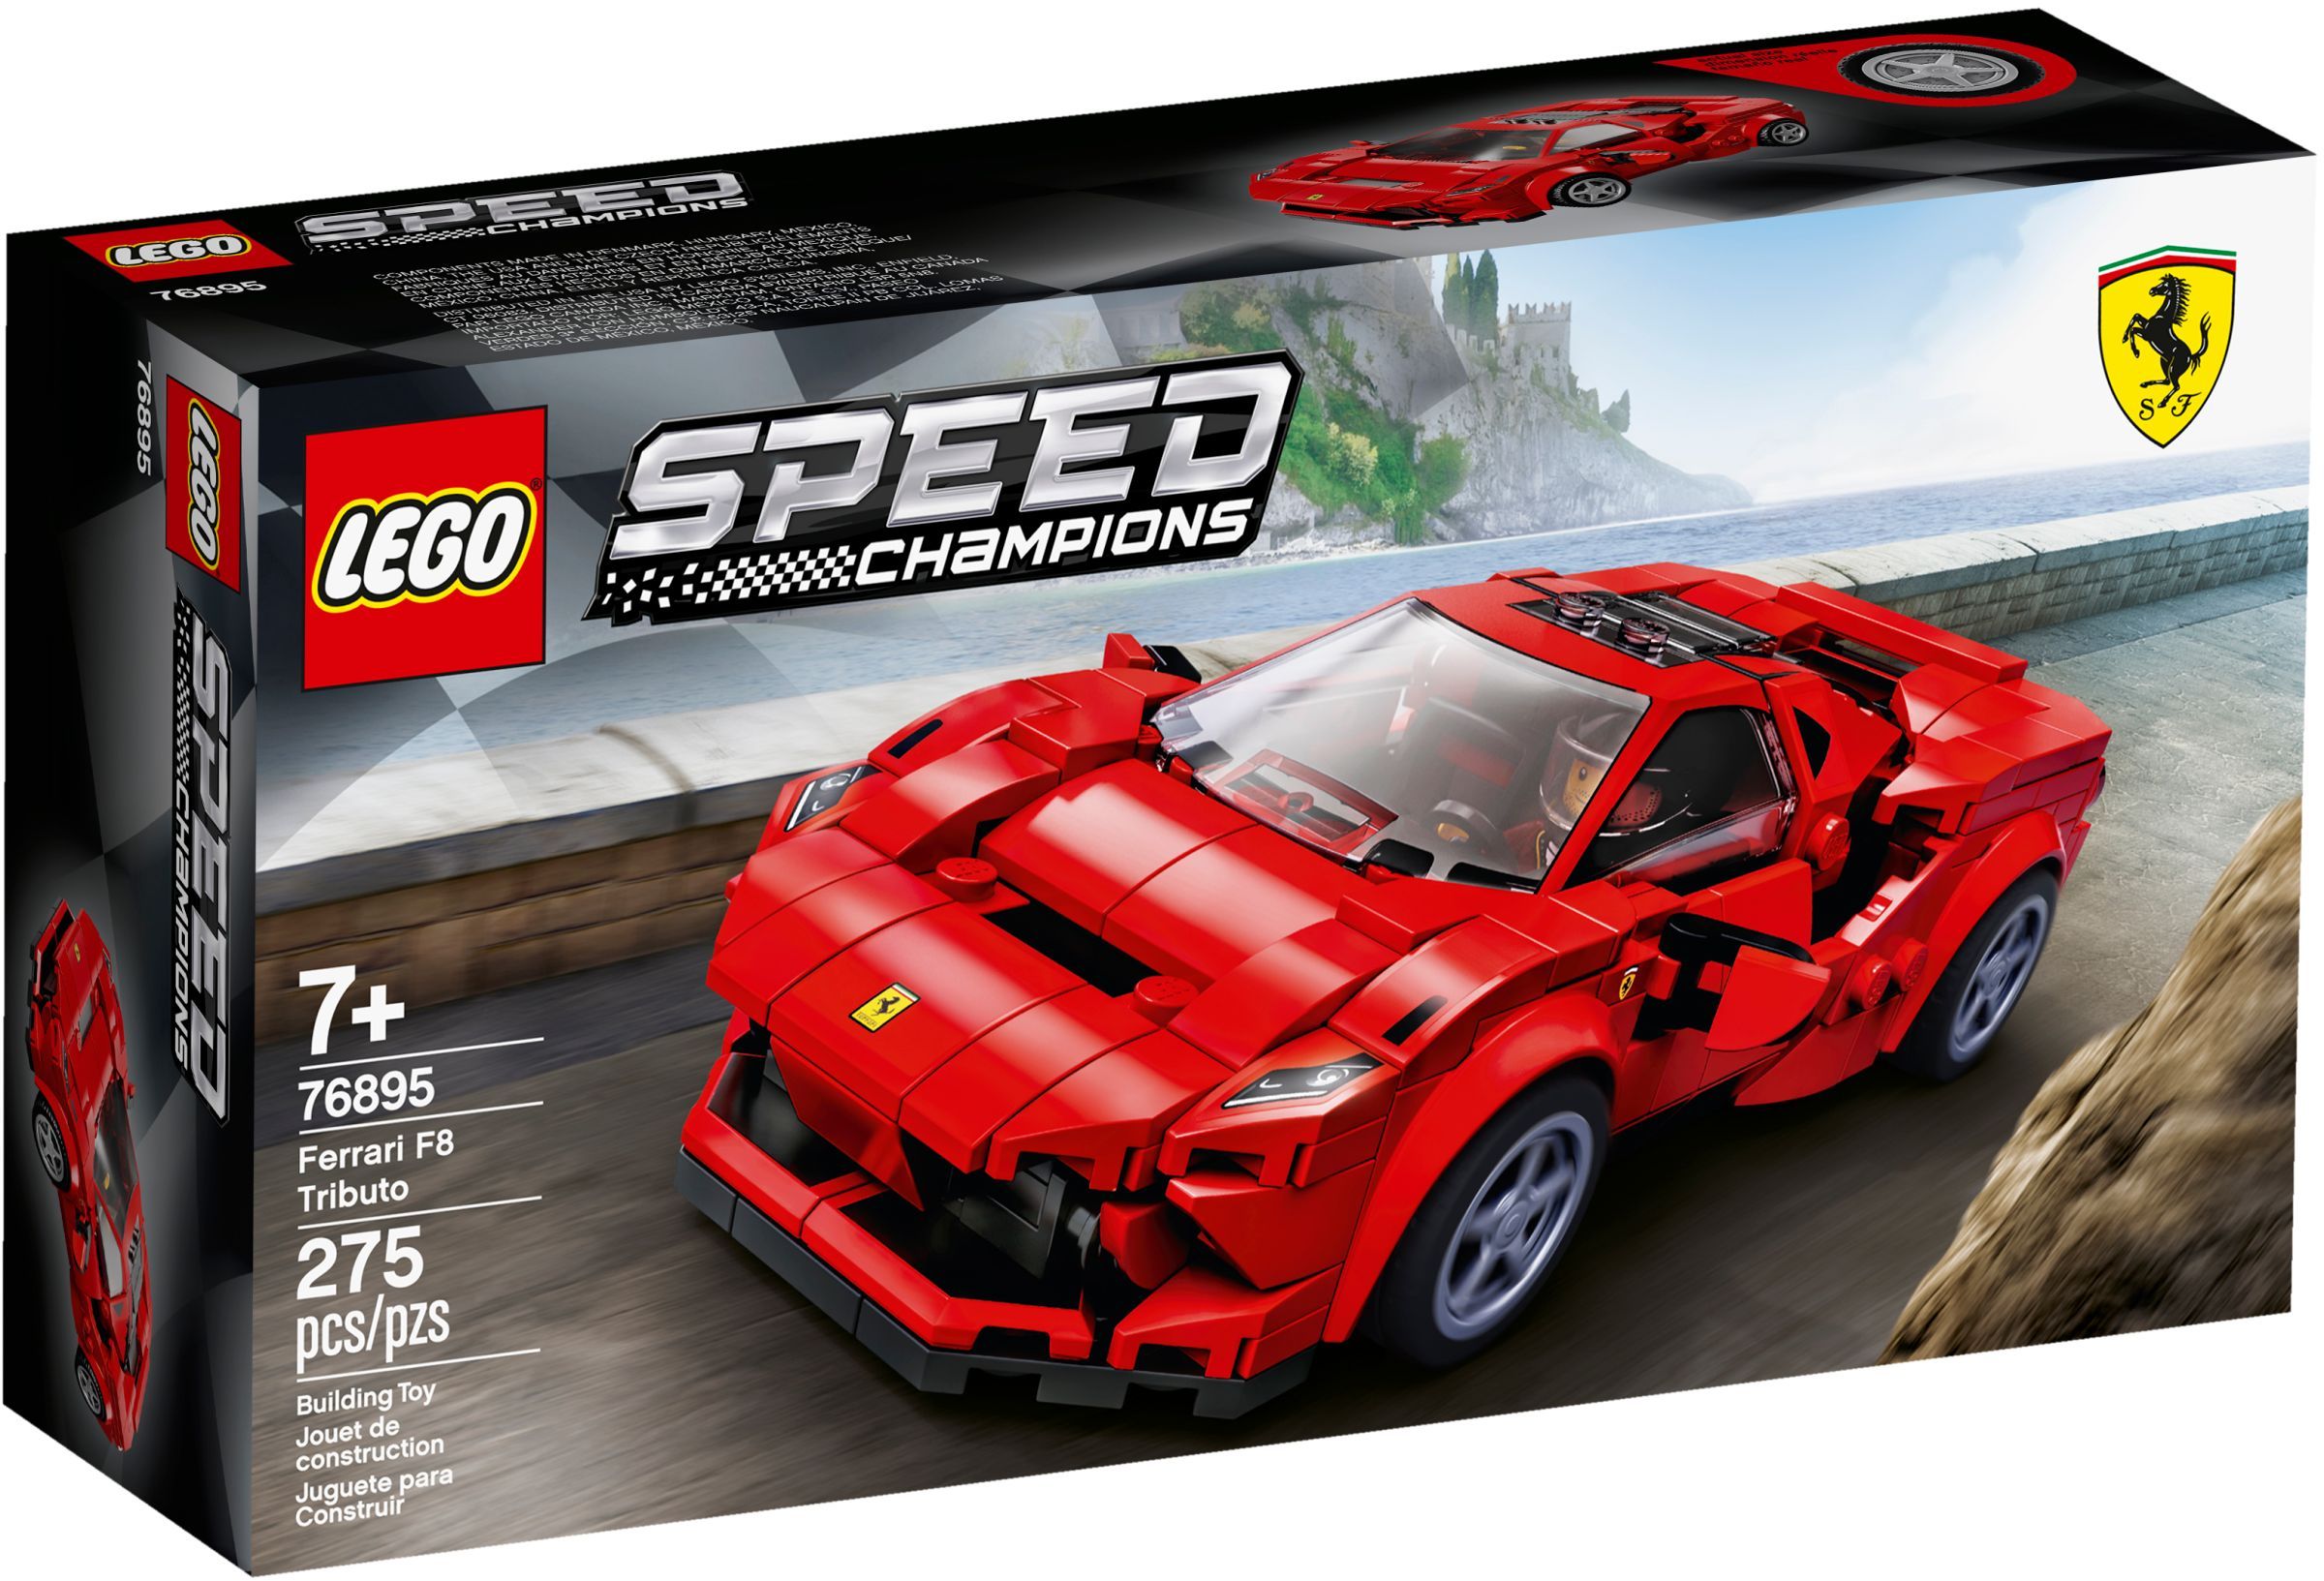 Lego Speed Champions 76895 Ferrari F8 Tributo Review